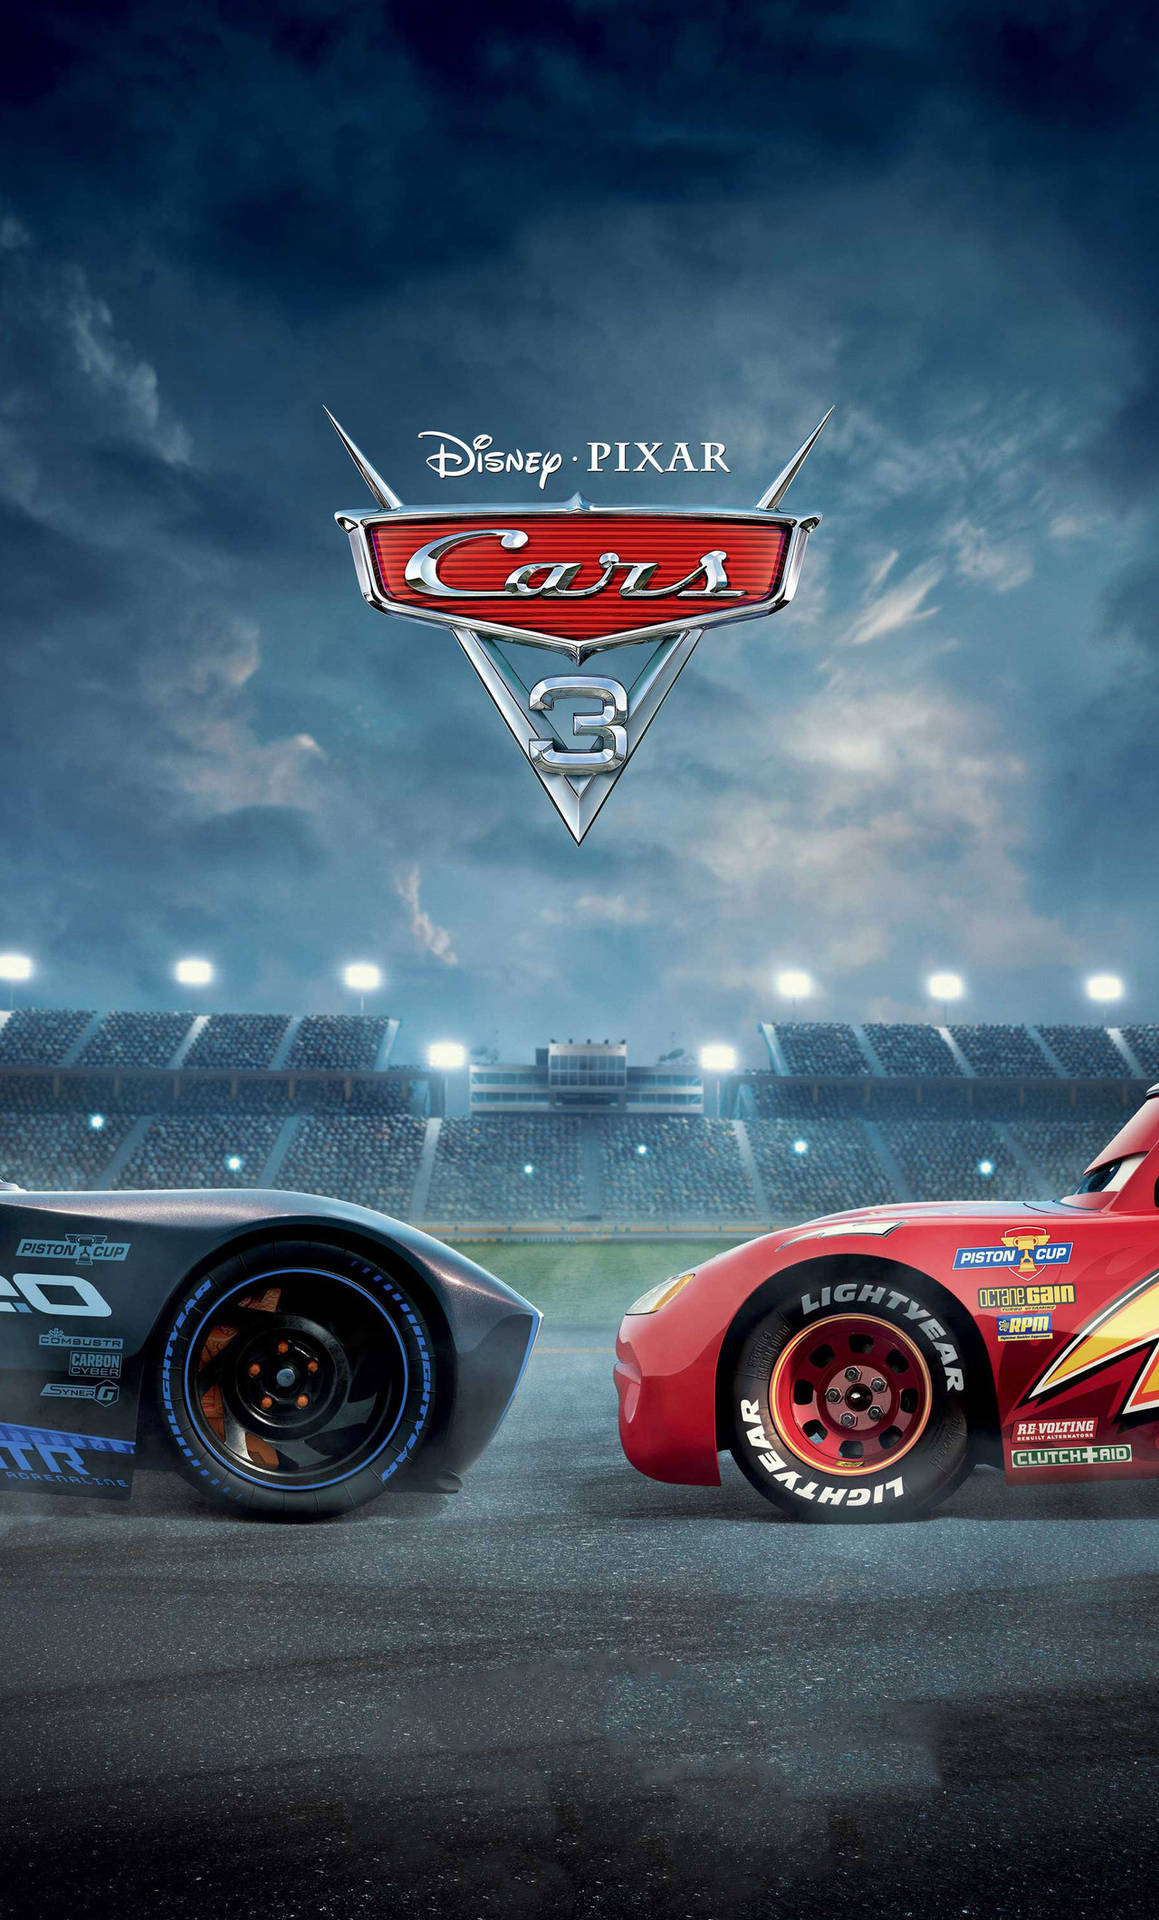 Pixar's Cars 3 Movie